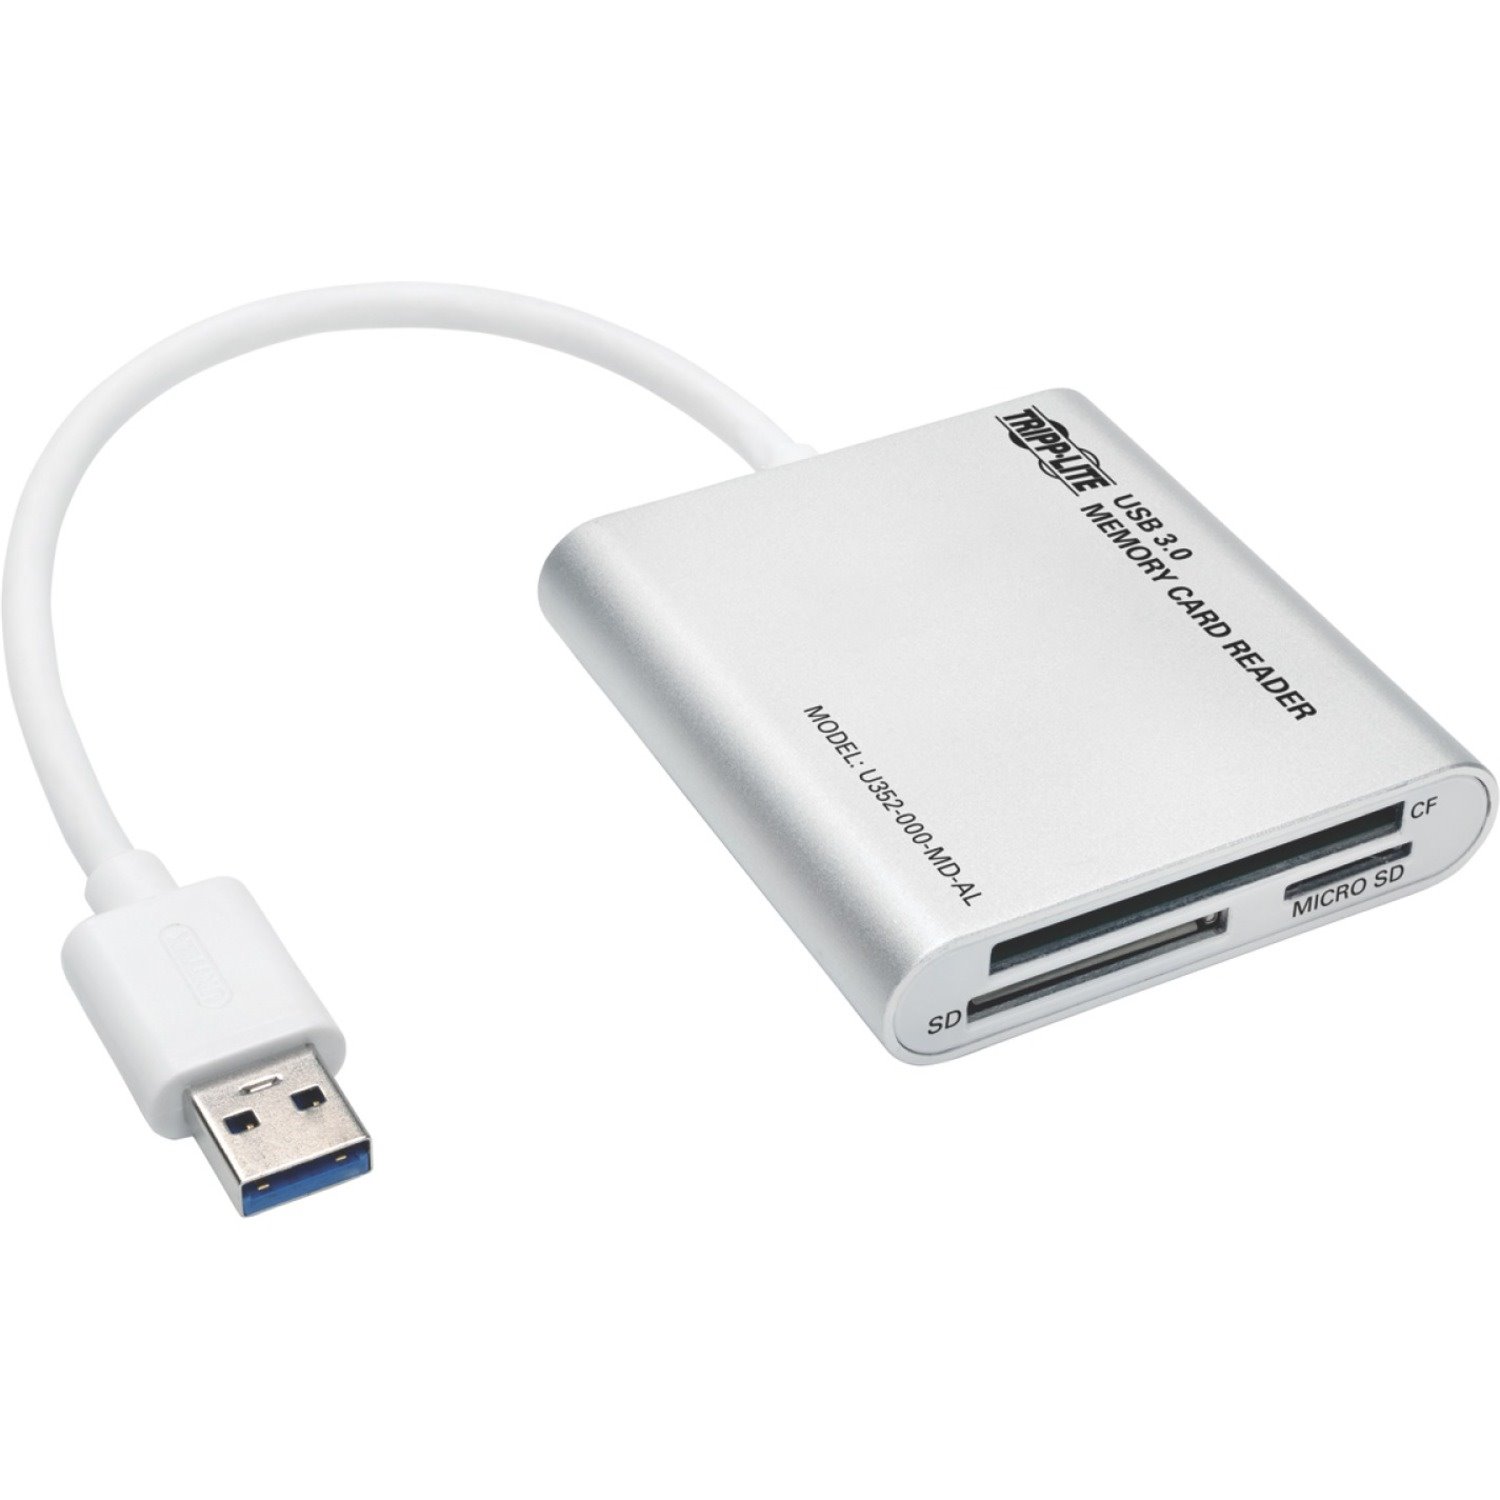 Tripp Lite by Eaton U352-000-MD-AL Flash Reader - USB 3.0 - External